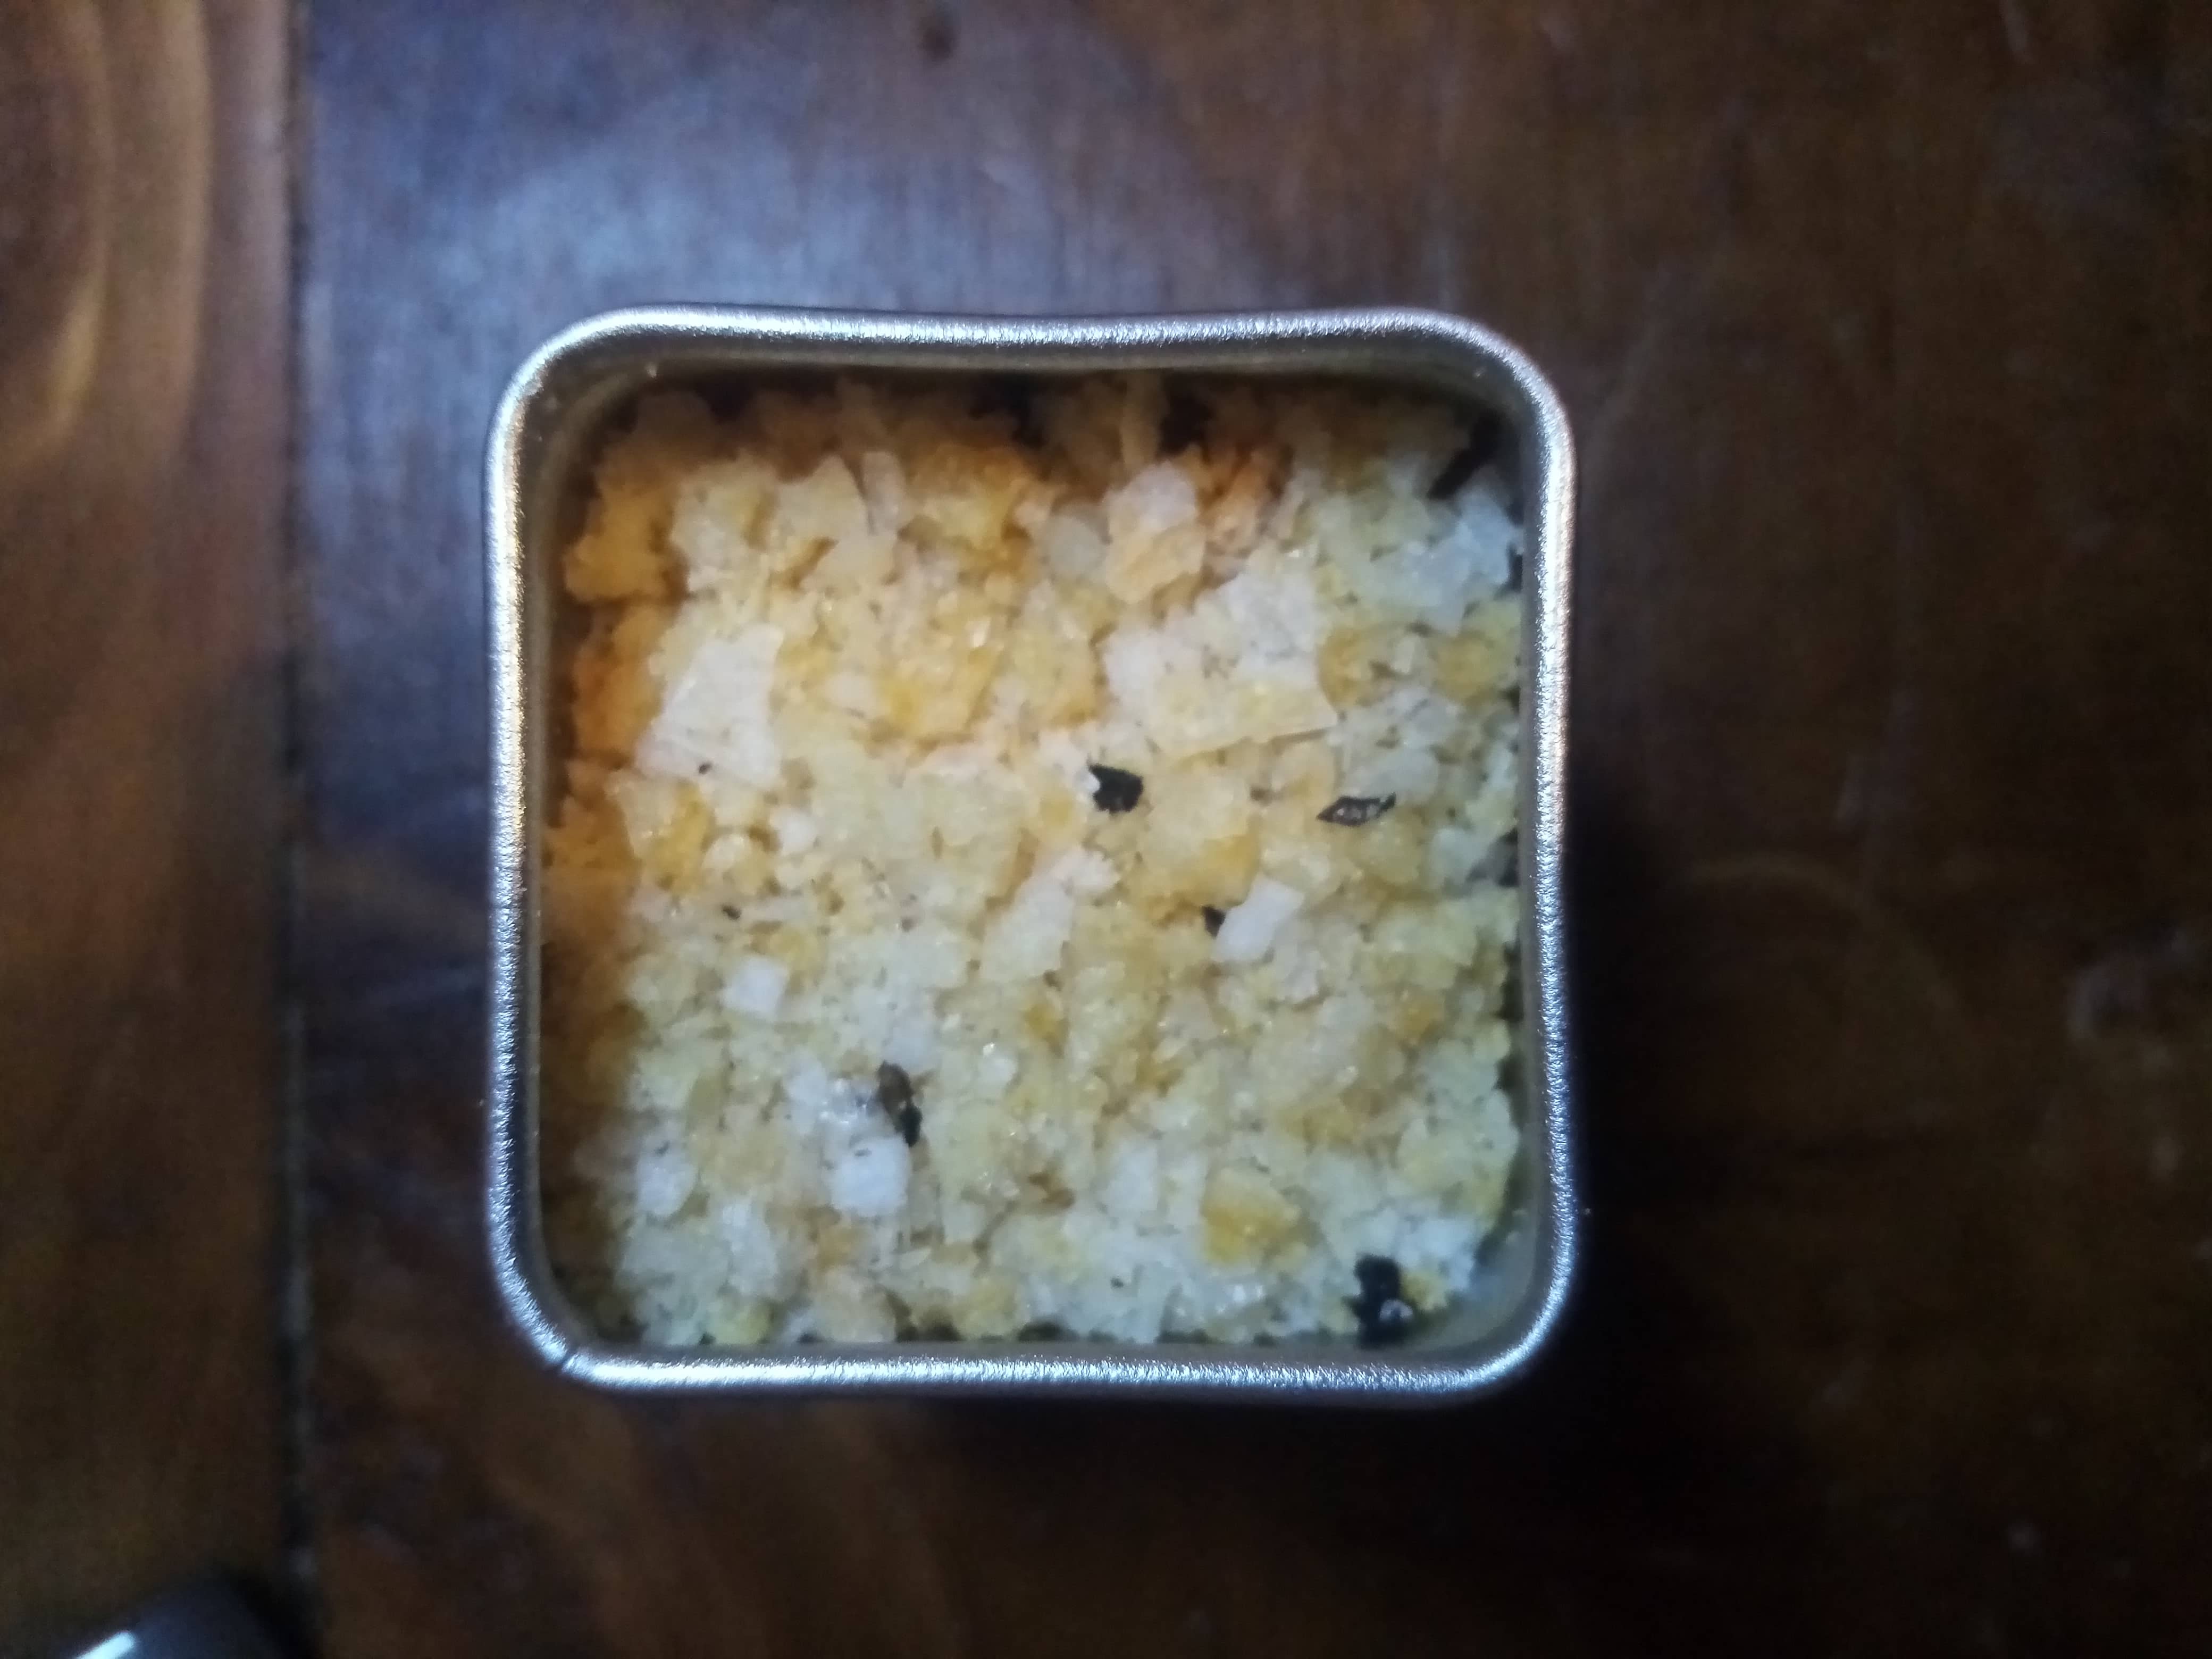 Autumn Krush. Black truffle, garlic and sea salt